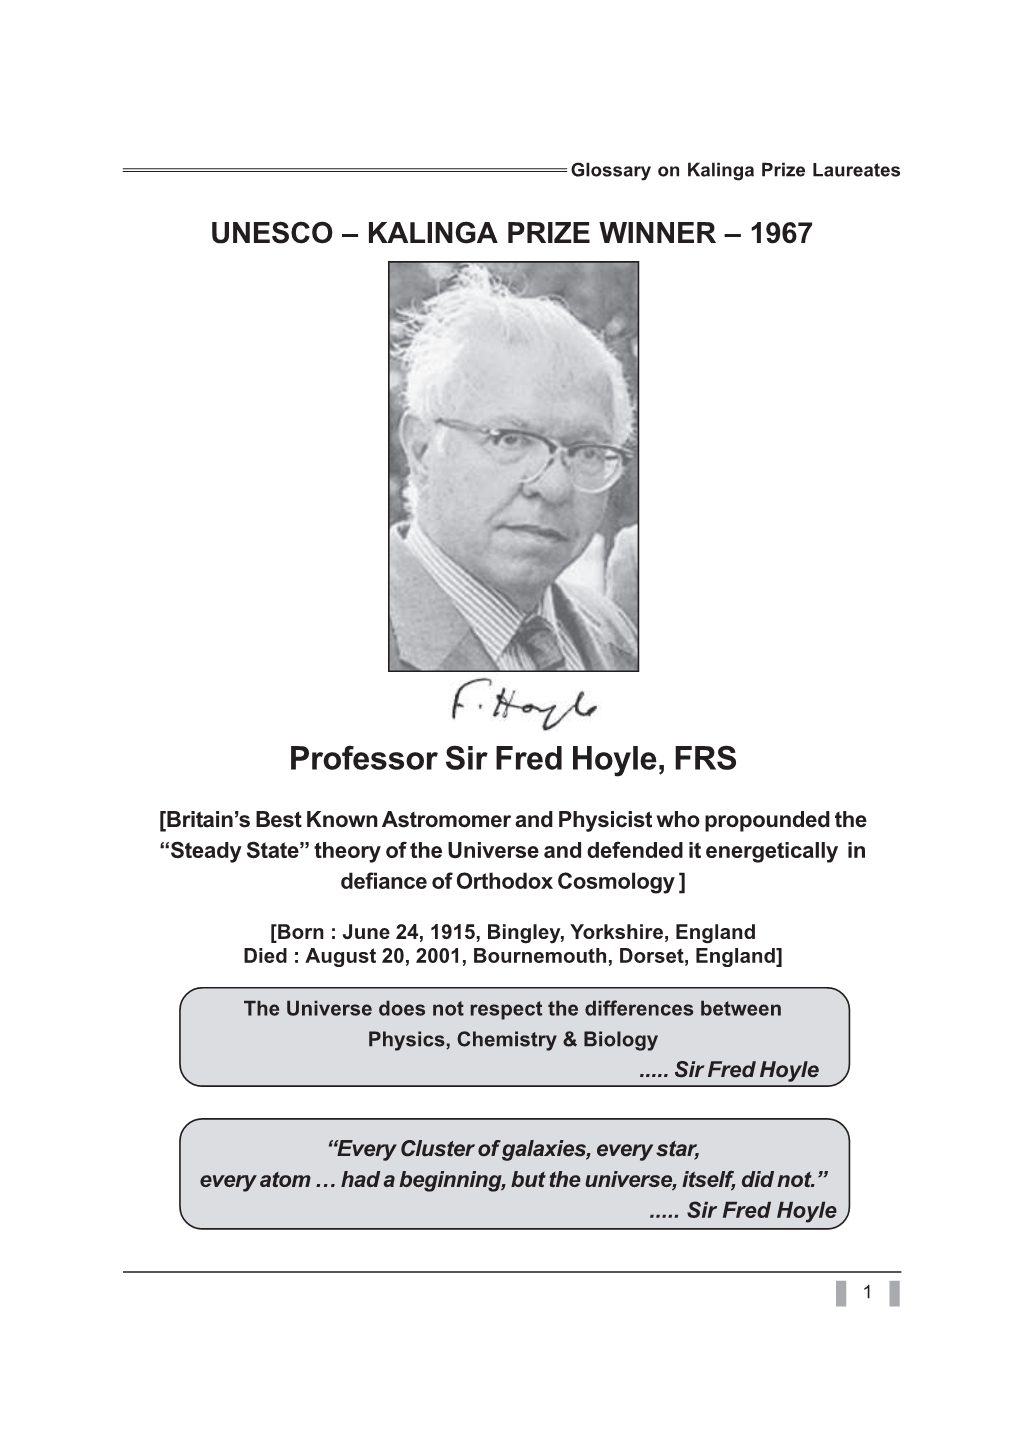 Professor Sir Fred Hoyle, FRS